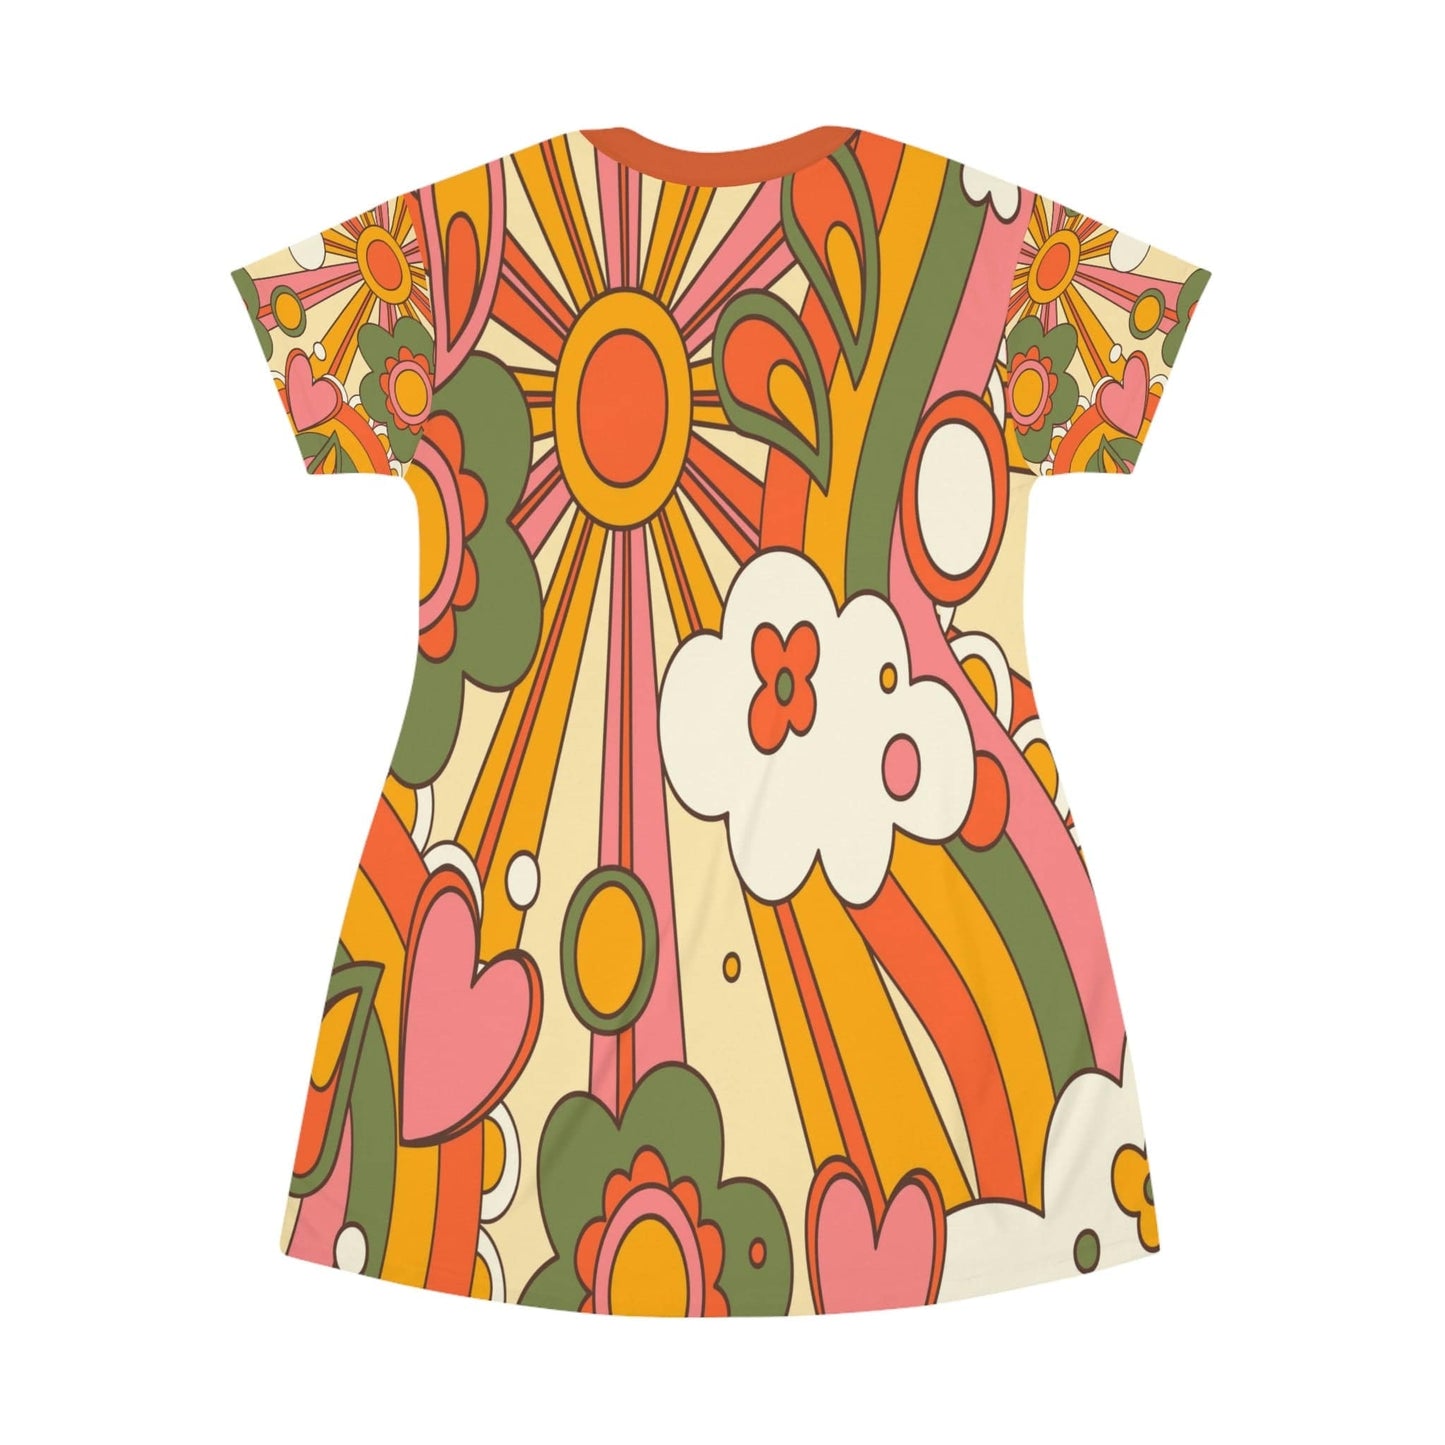 Kate McEnroe New York Retro Groovy Hippie 70s Sunburst T-Shirt Dress in Mid Century Modern Burnt Orange, Mustard Yellow, Green, Summer Party Dress, Hippie Gifts T-Shirt Dress